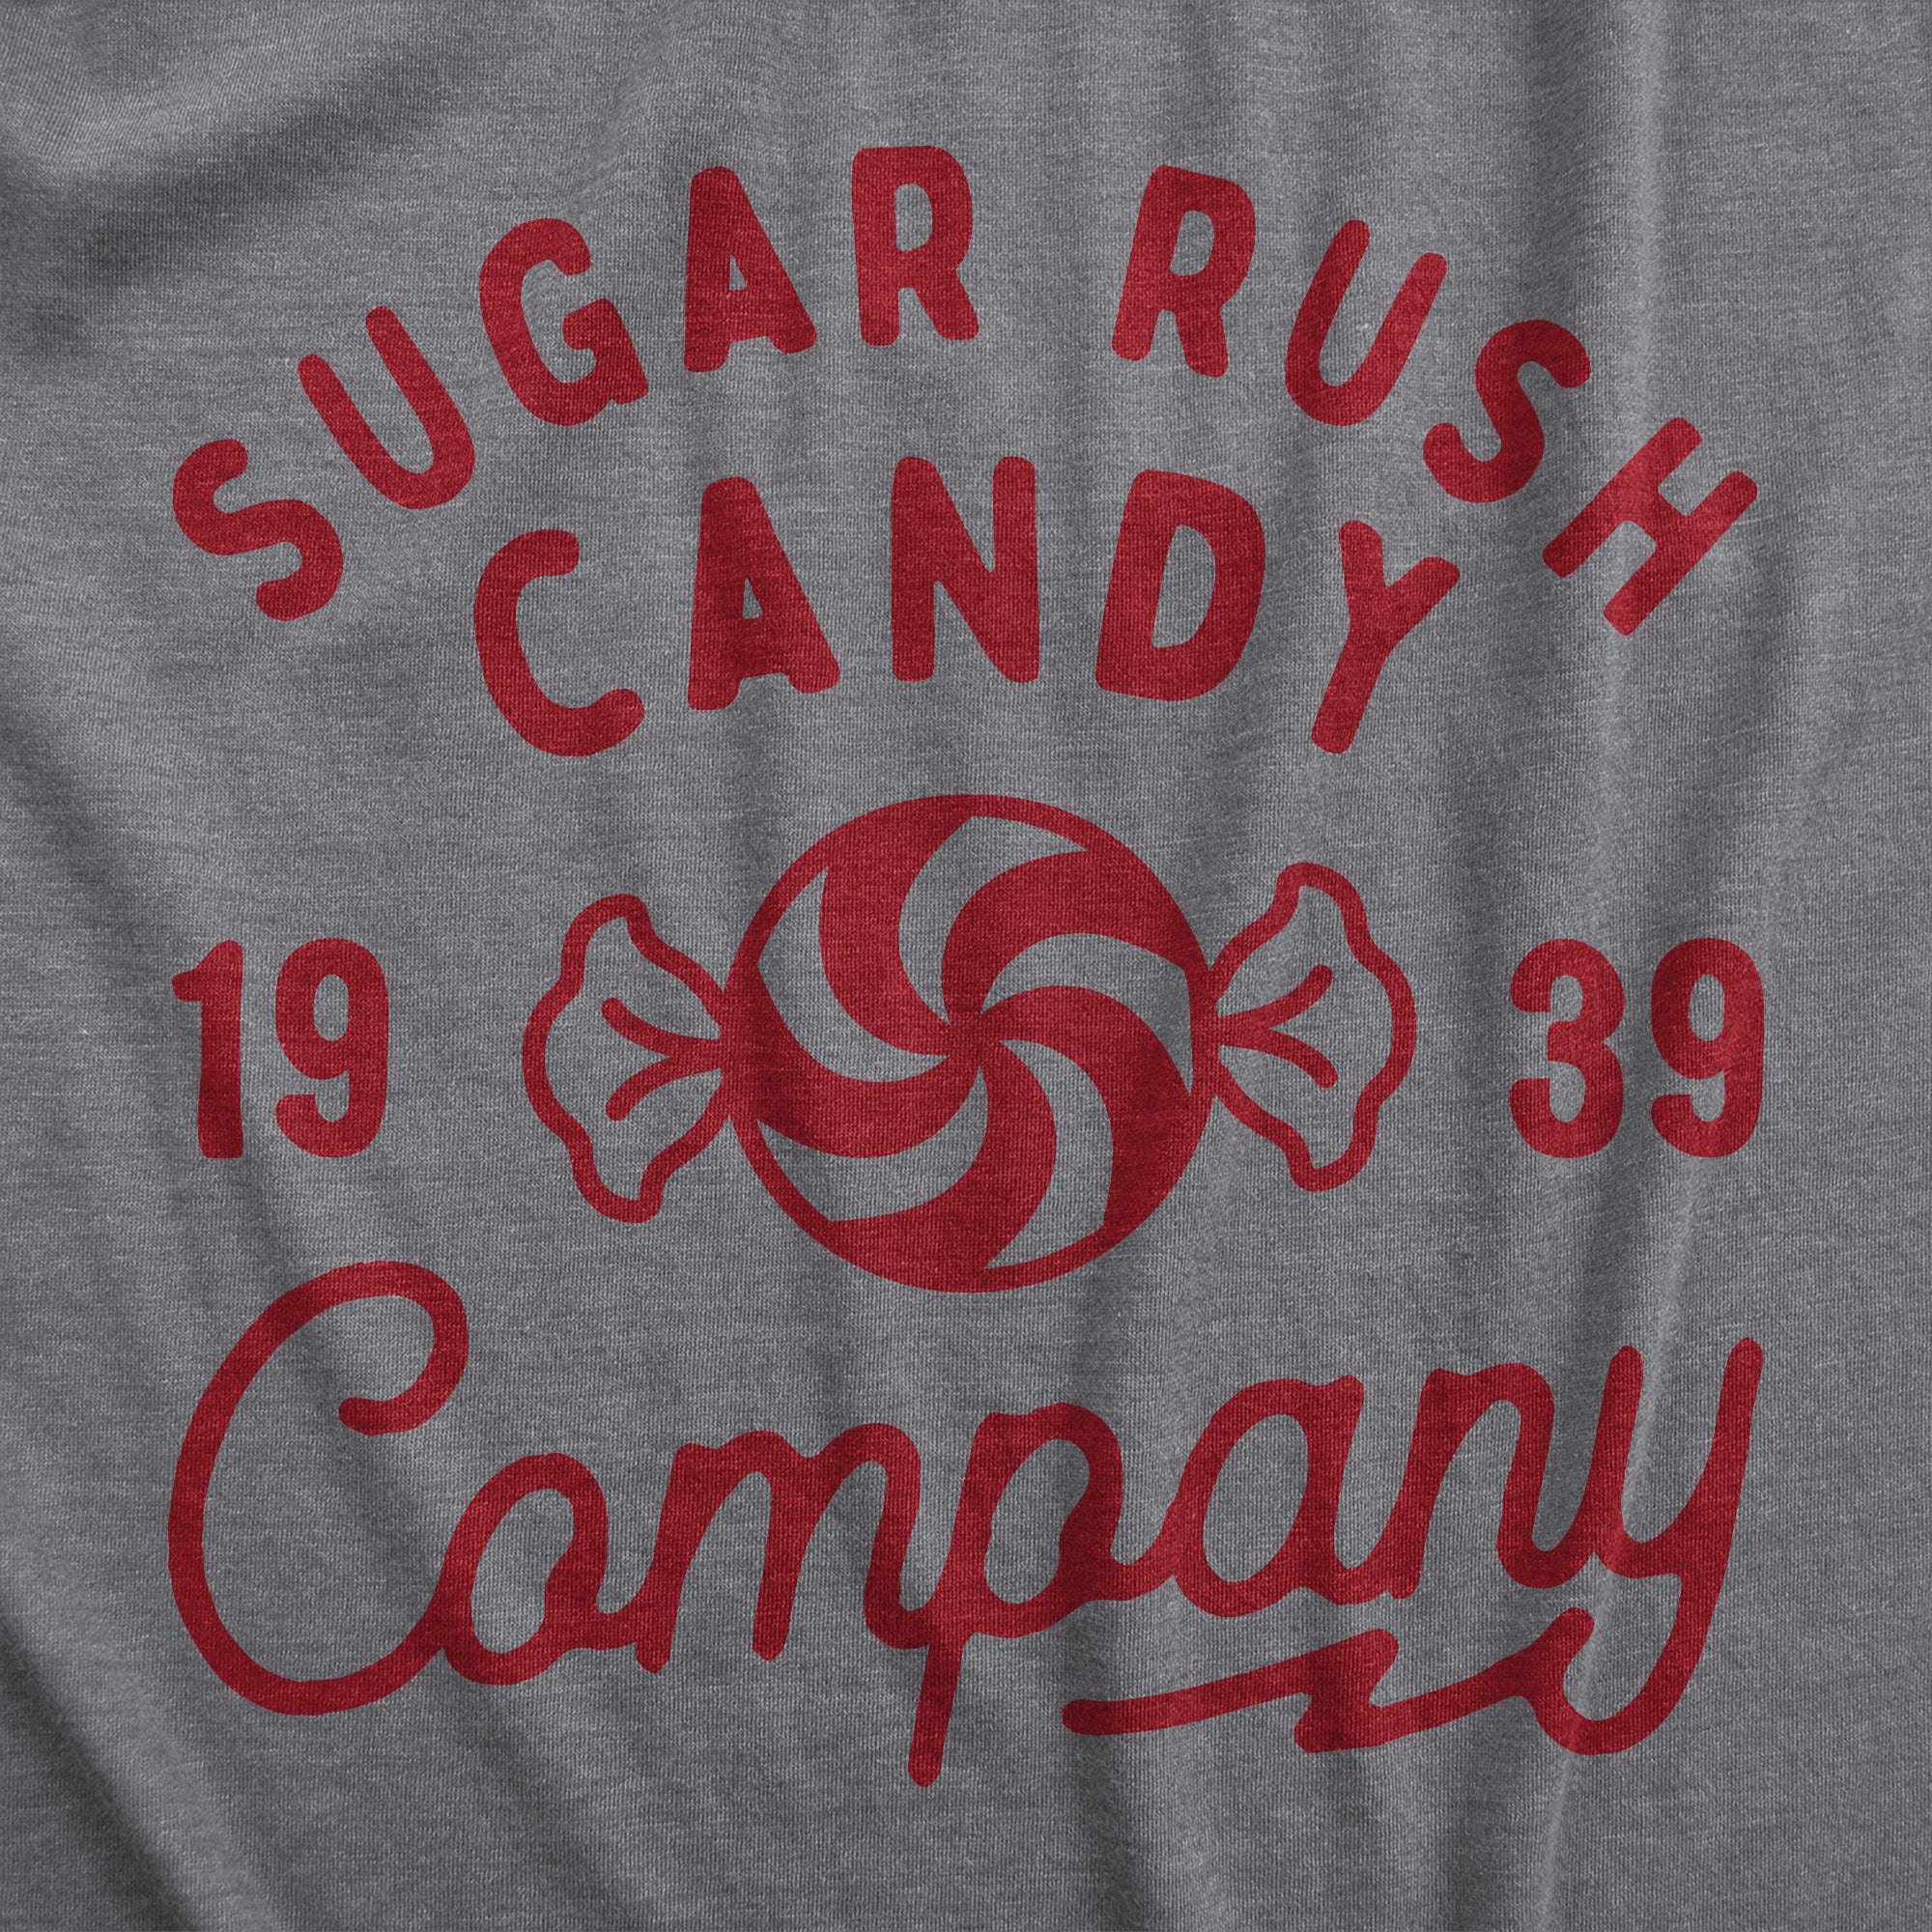 Funny Dark Heather Grey - SUGARRUSH Sugar Rush Candy Company Youth T Shirt Nerdy Food Tee